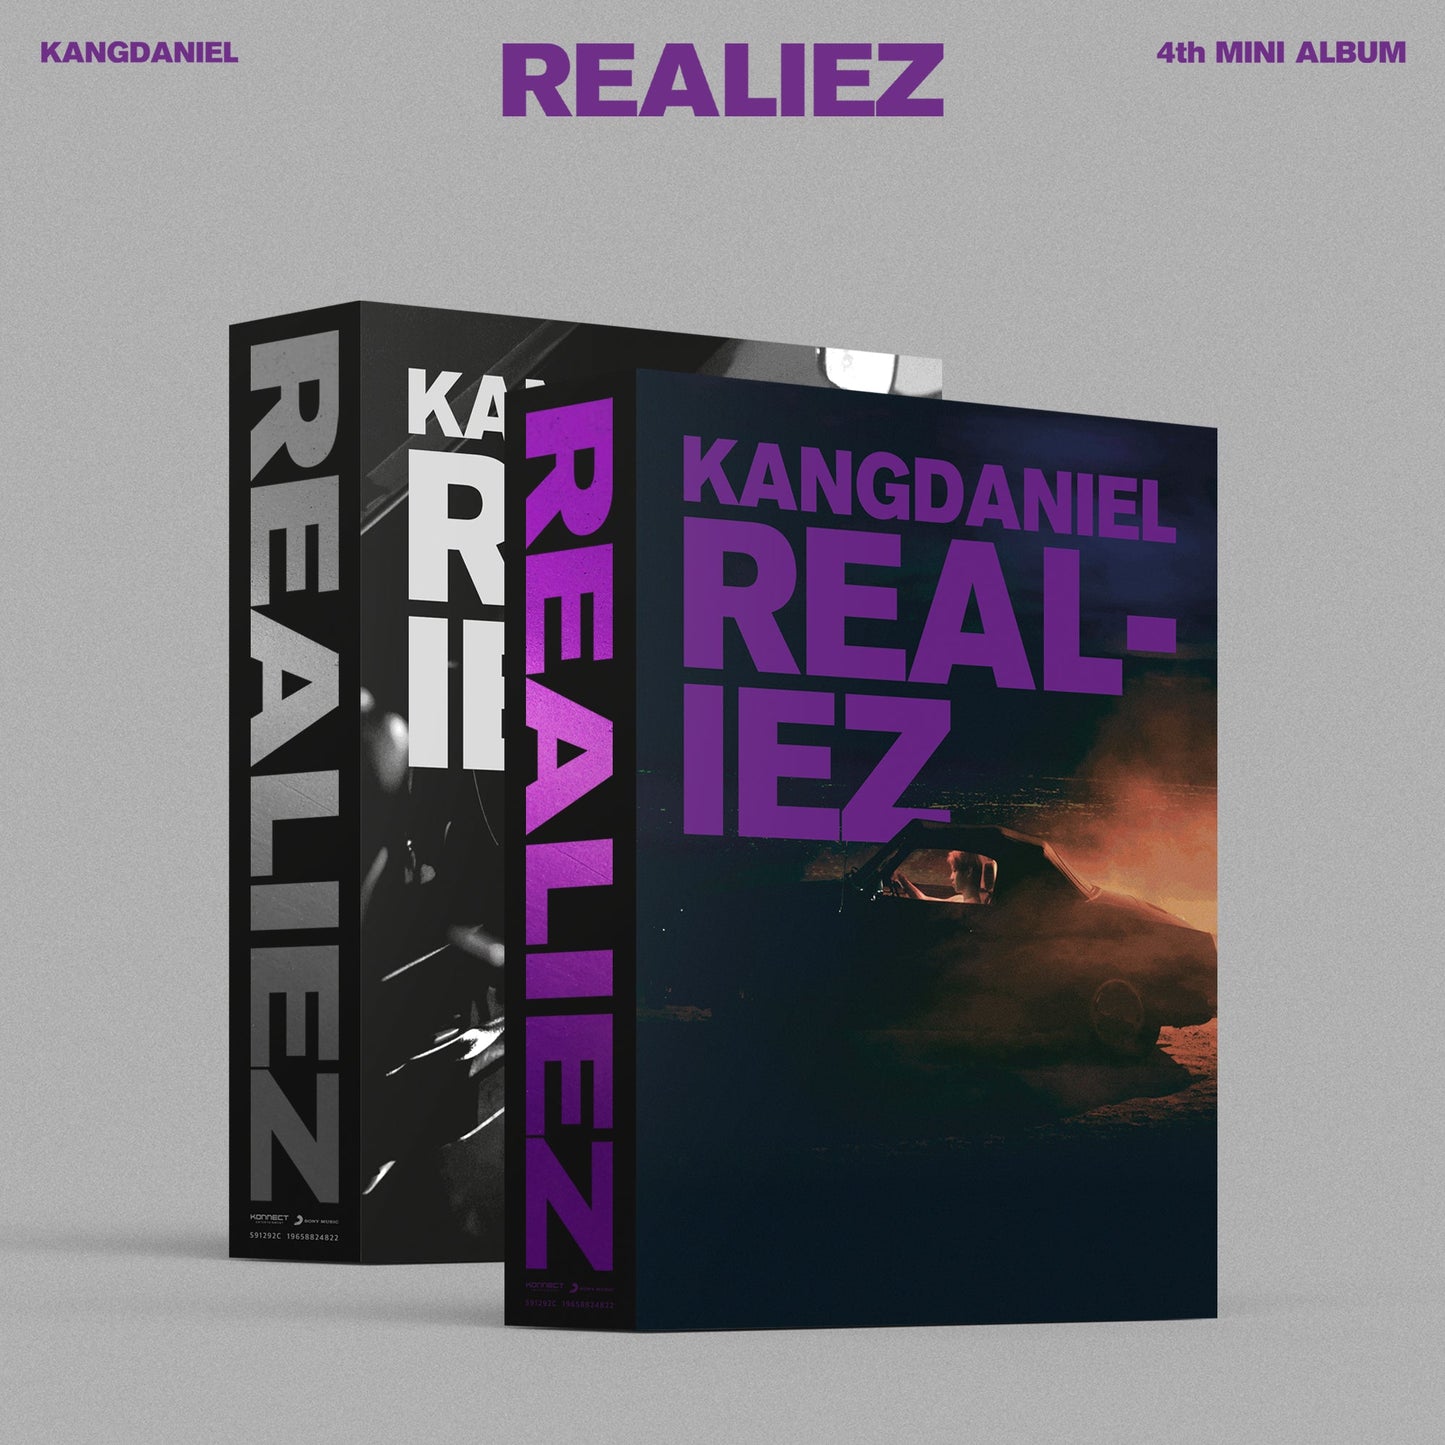 KANG DANIEL 4TH MINI ALBUM 'REALIEZ' SET COVER